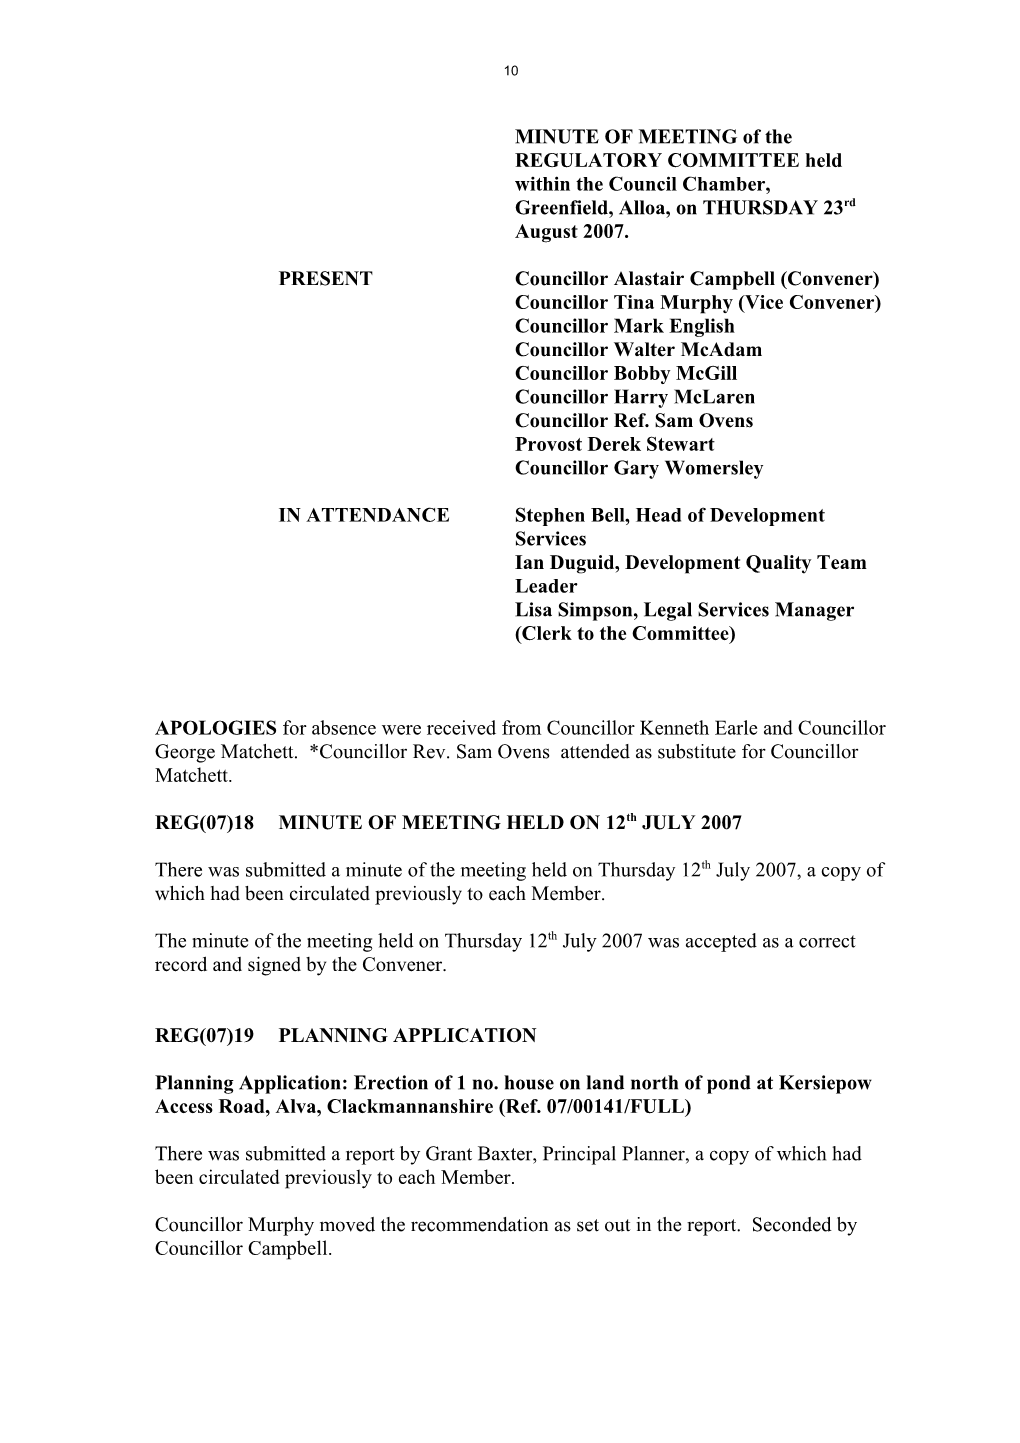 Regulatory Committee Minutes 23Rd August 2007